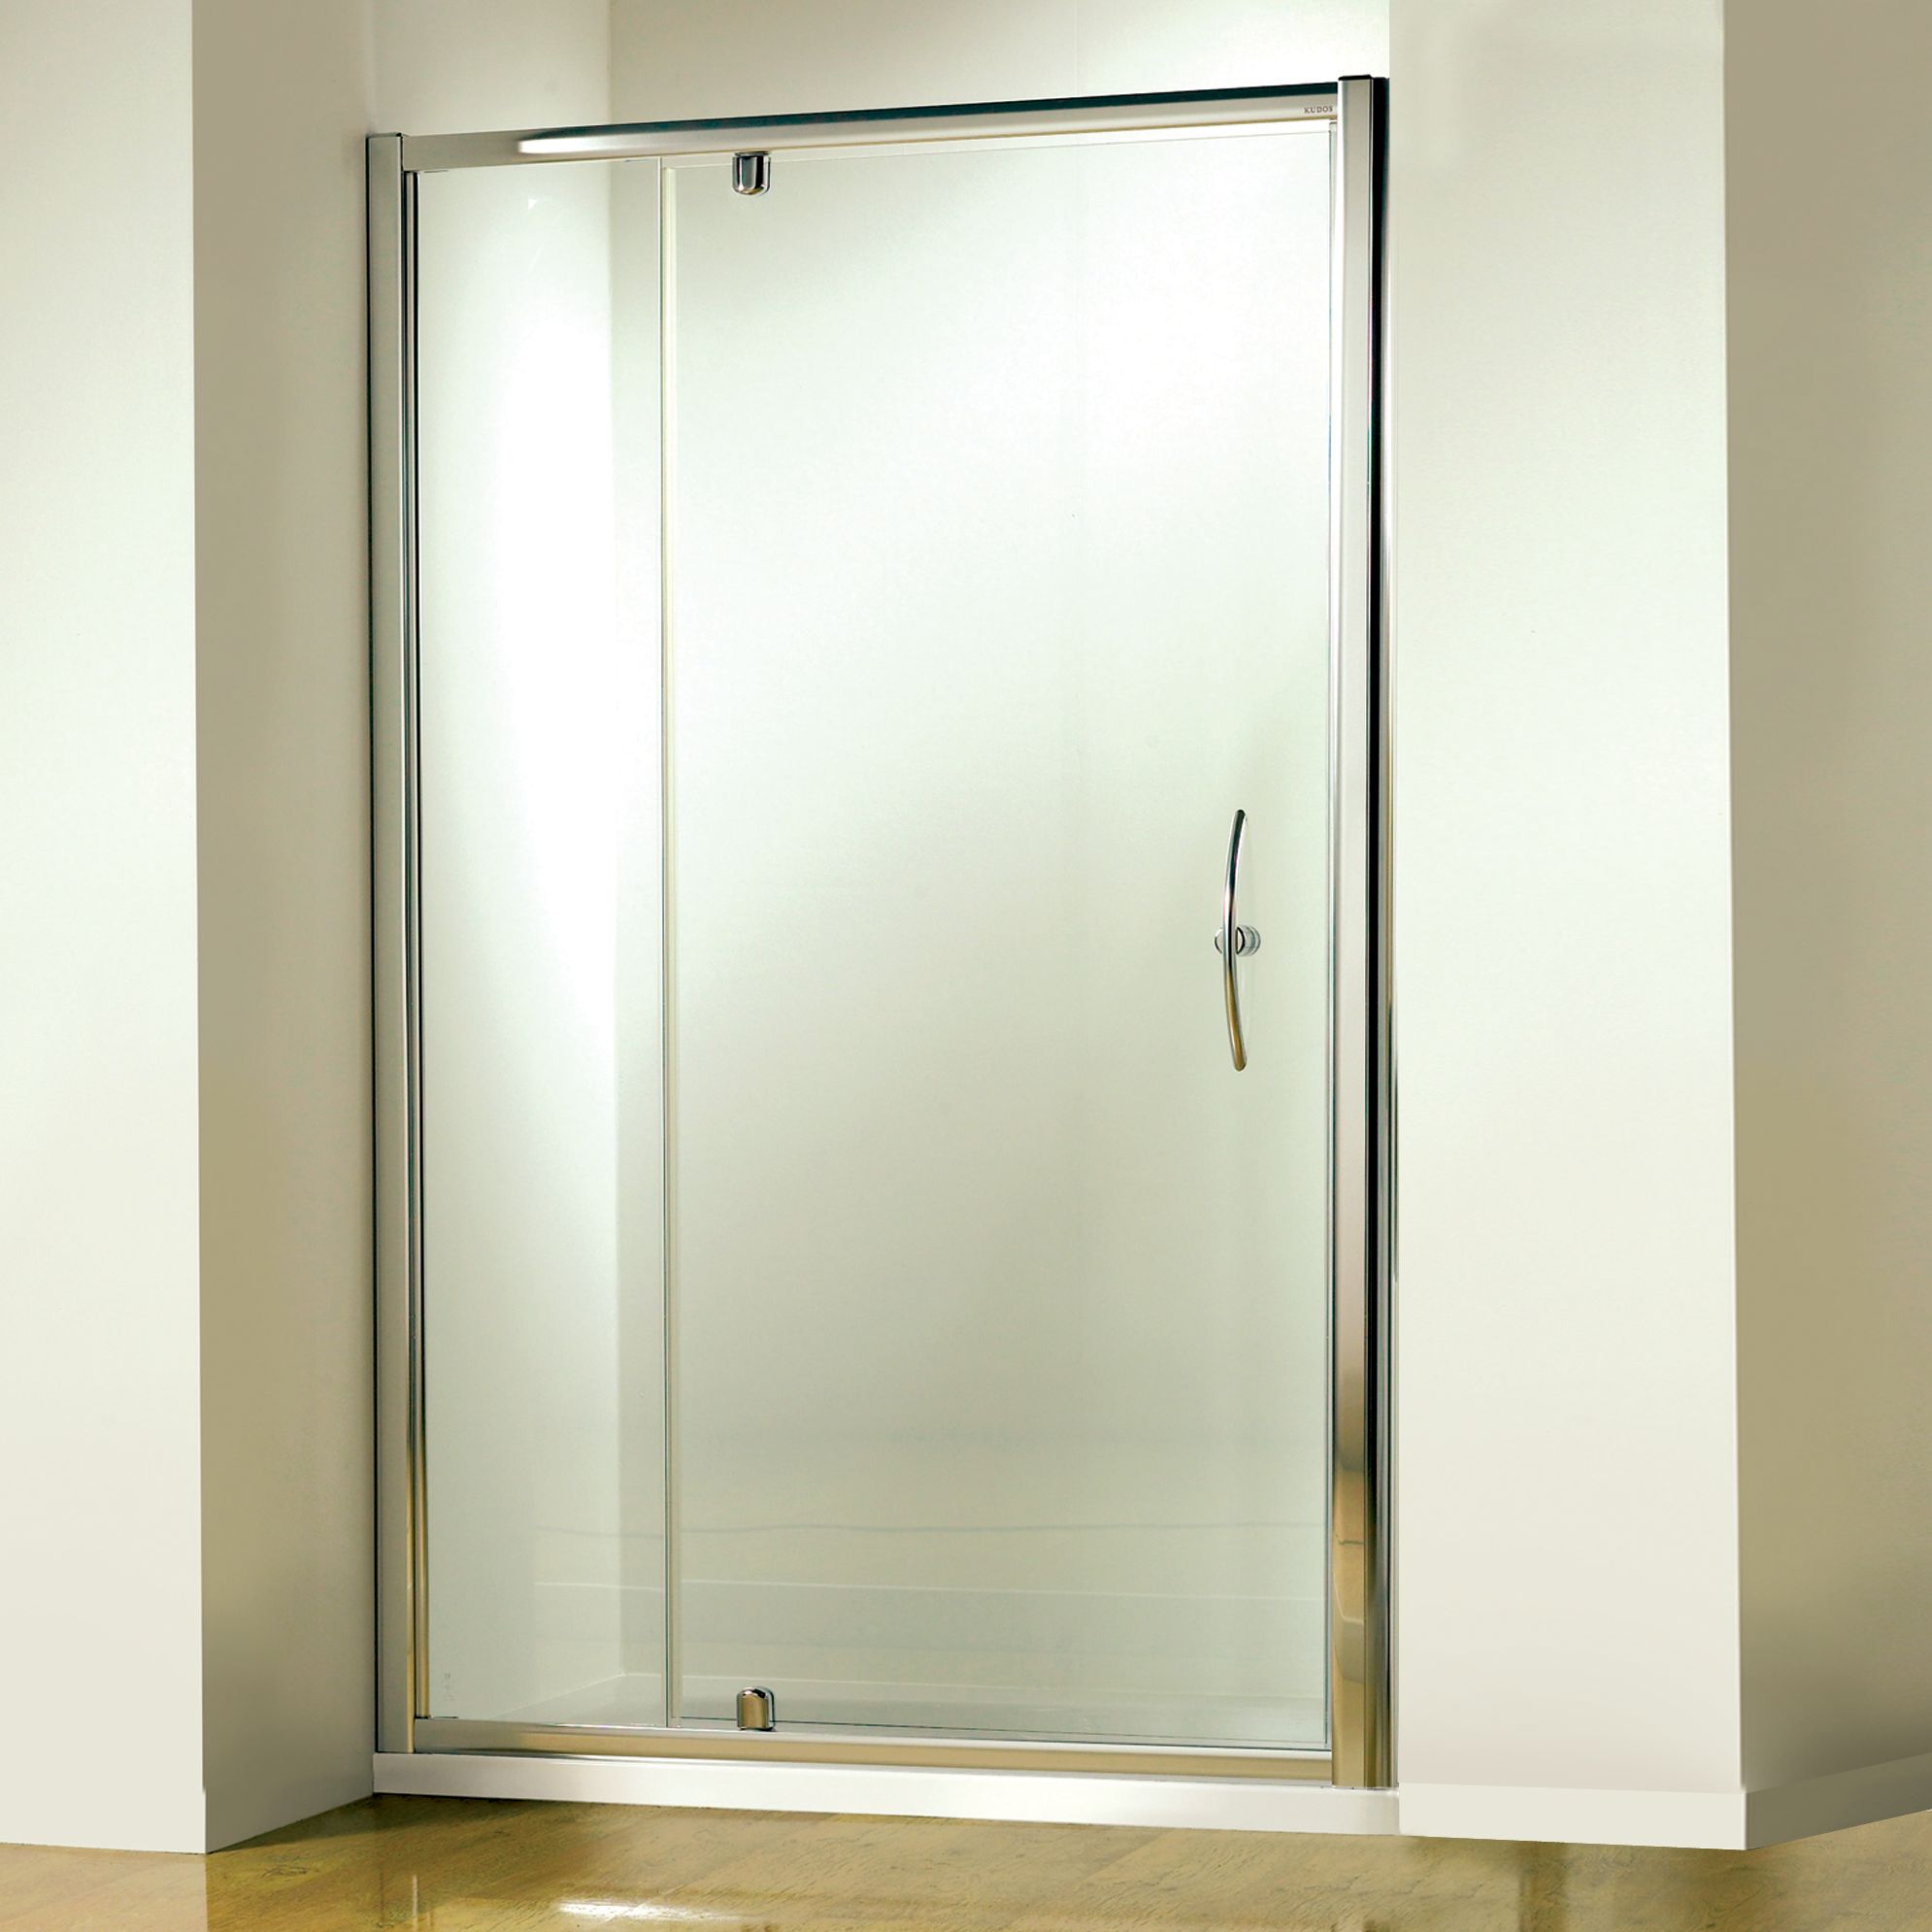 John Lewis & Partners 76 x 76cm Shower Enclosure with Pivot Door